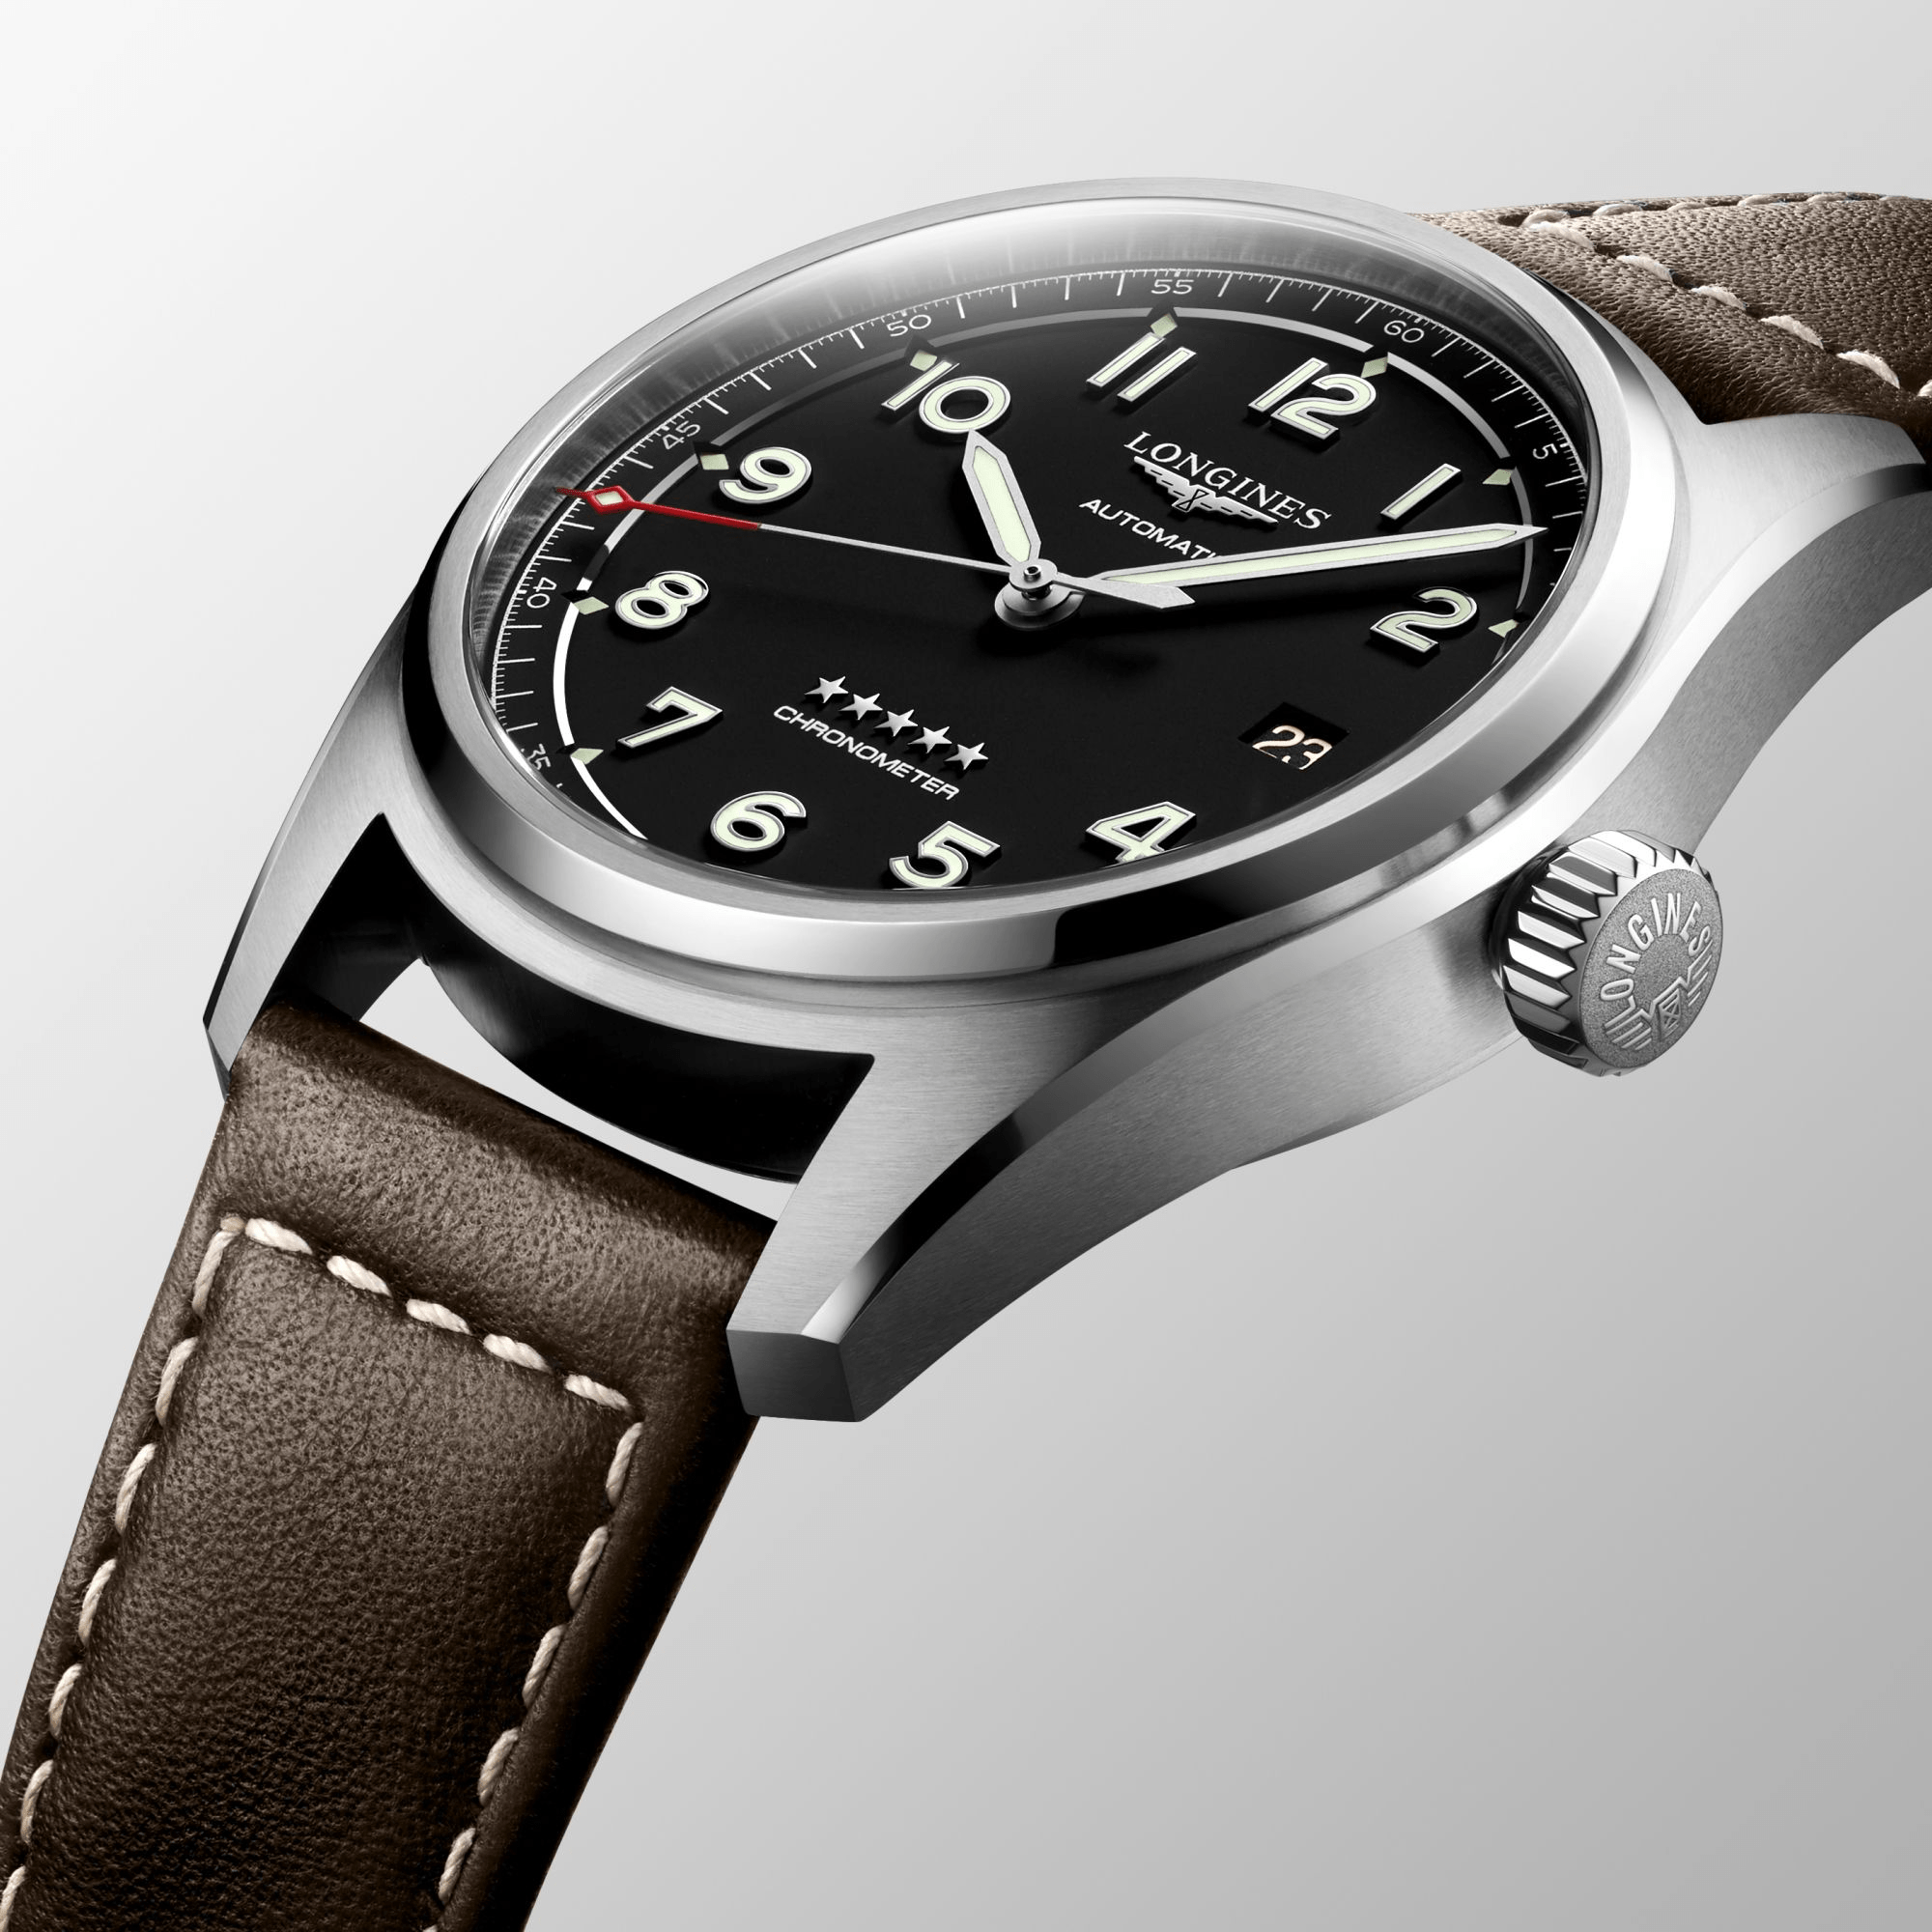 Longines Spirit 40mm Chronometer Black Matt Men's Watch L38104530